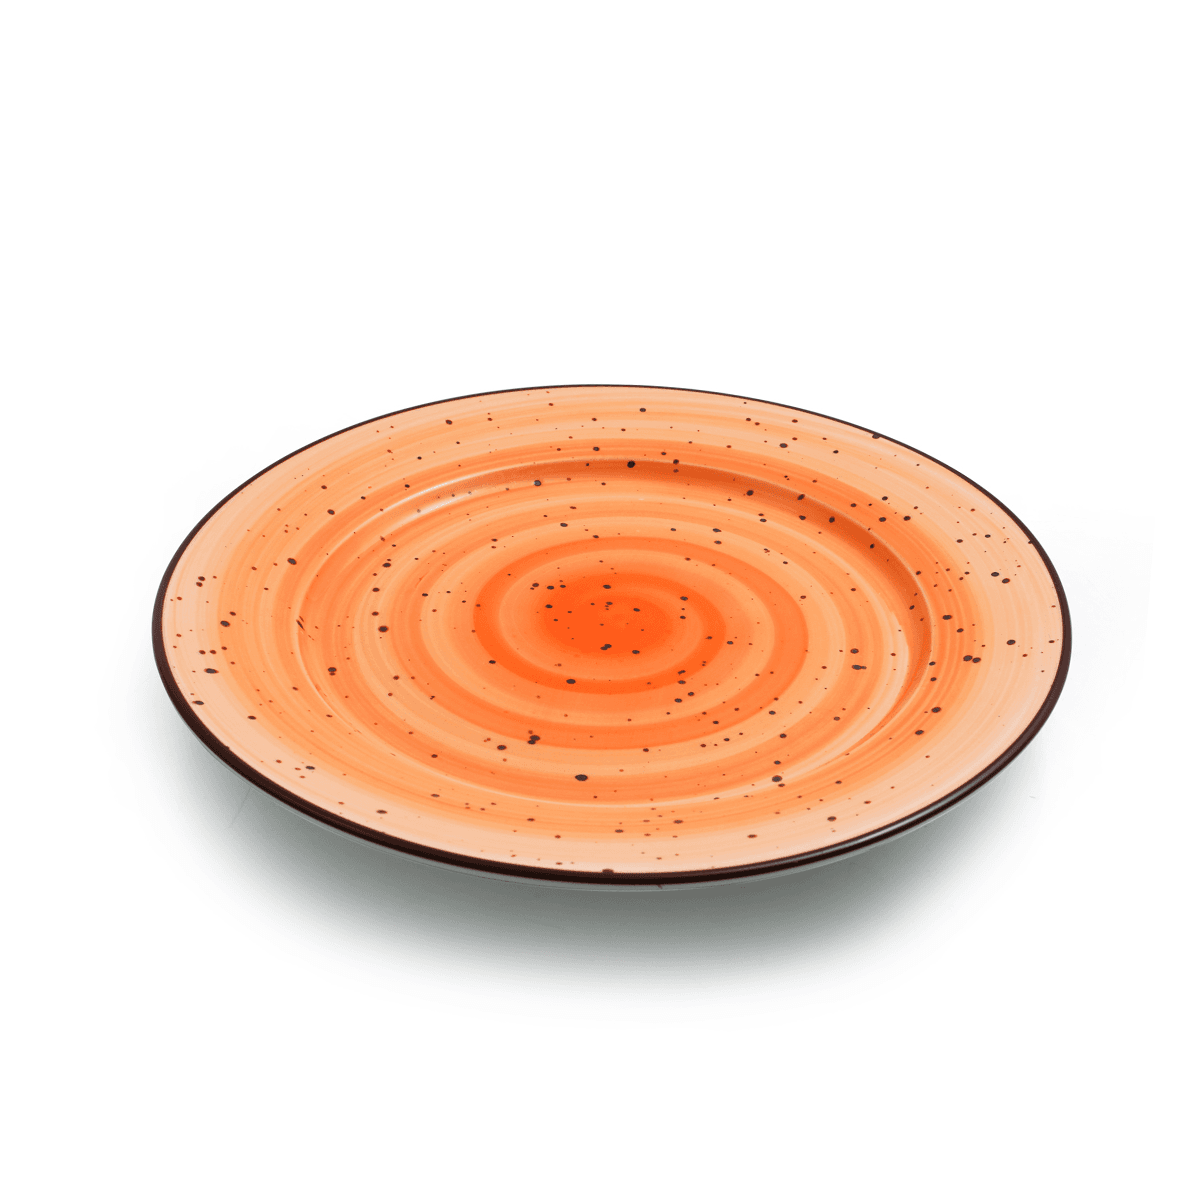 صحن تقديم مسطح بورسلان 8 بوصة برتقالي بورسليتا Porceletta Glazed Porcelain Flat Plate